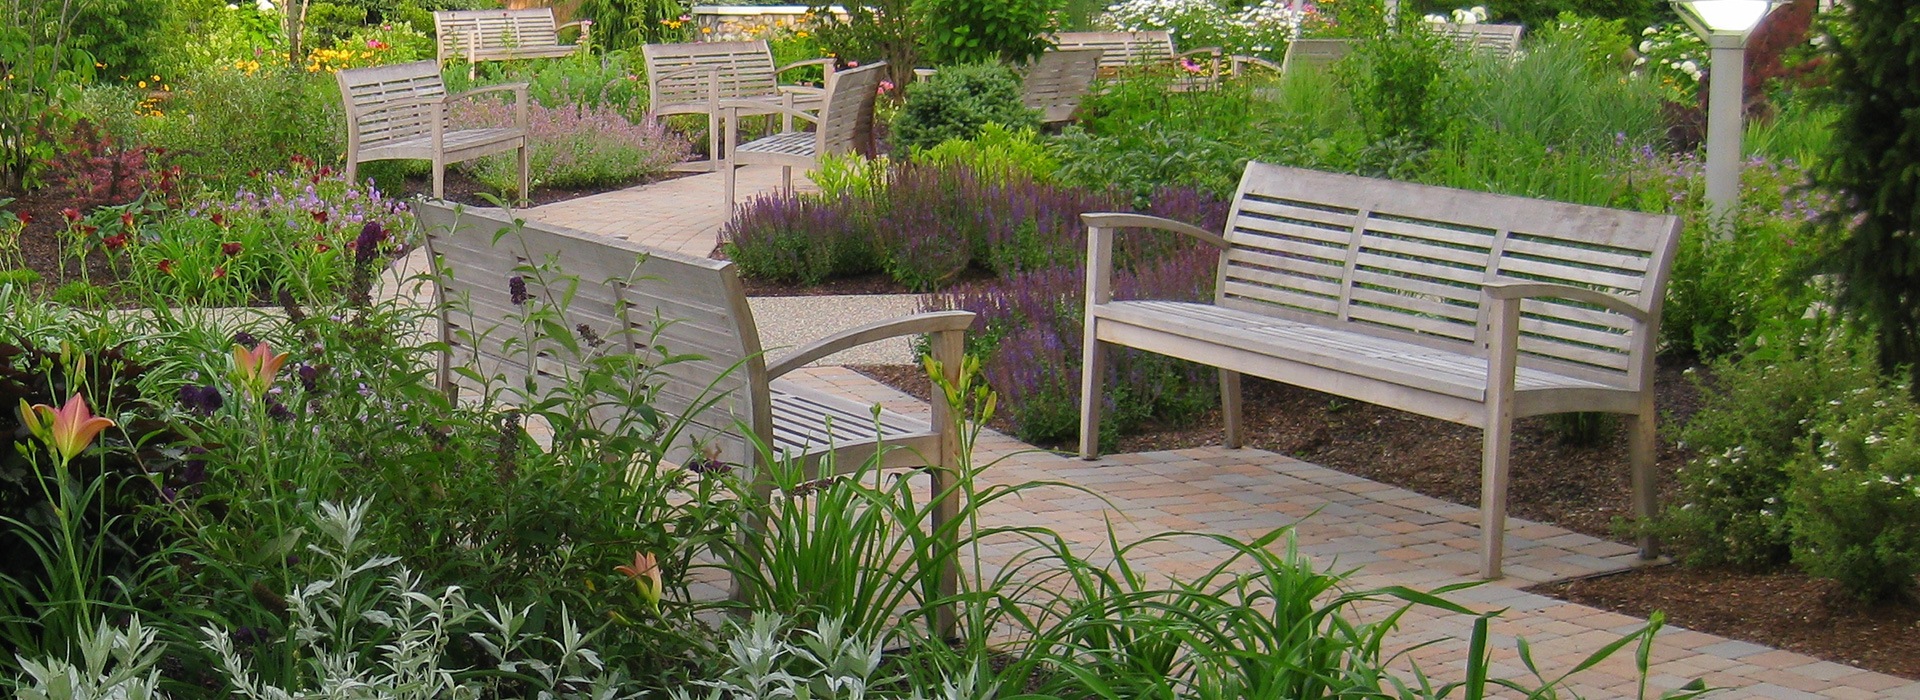 Benches at McLaren Garden of Healing and Renewal